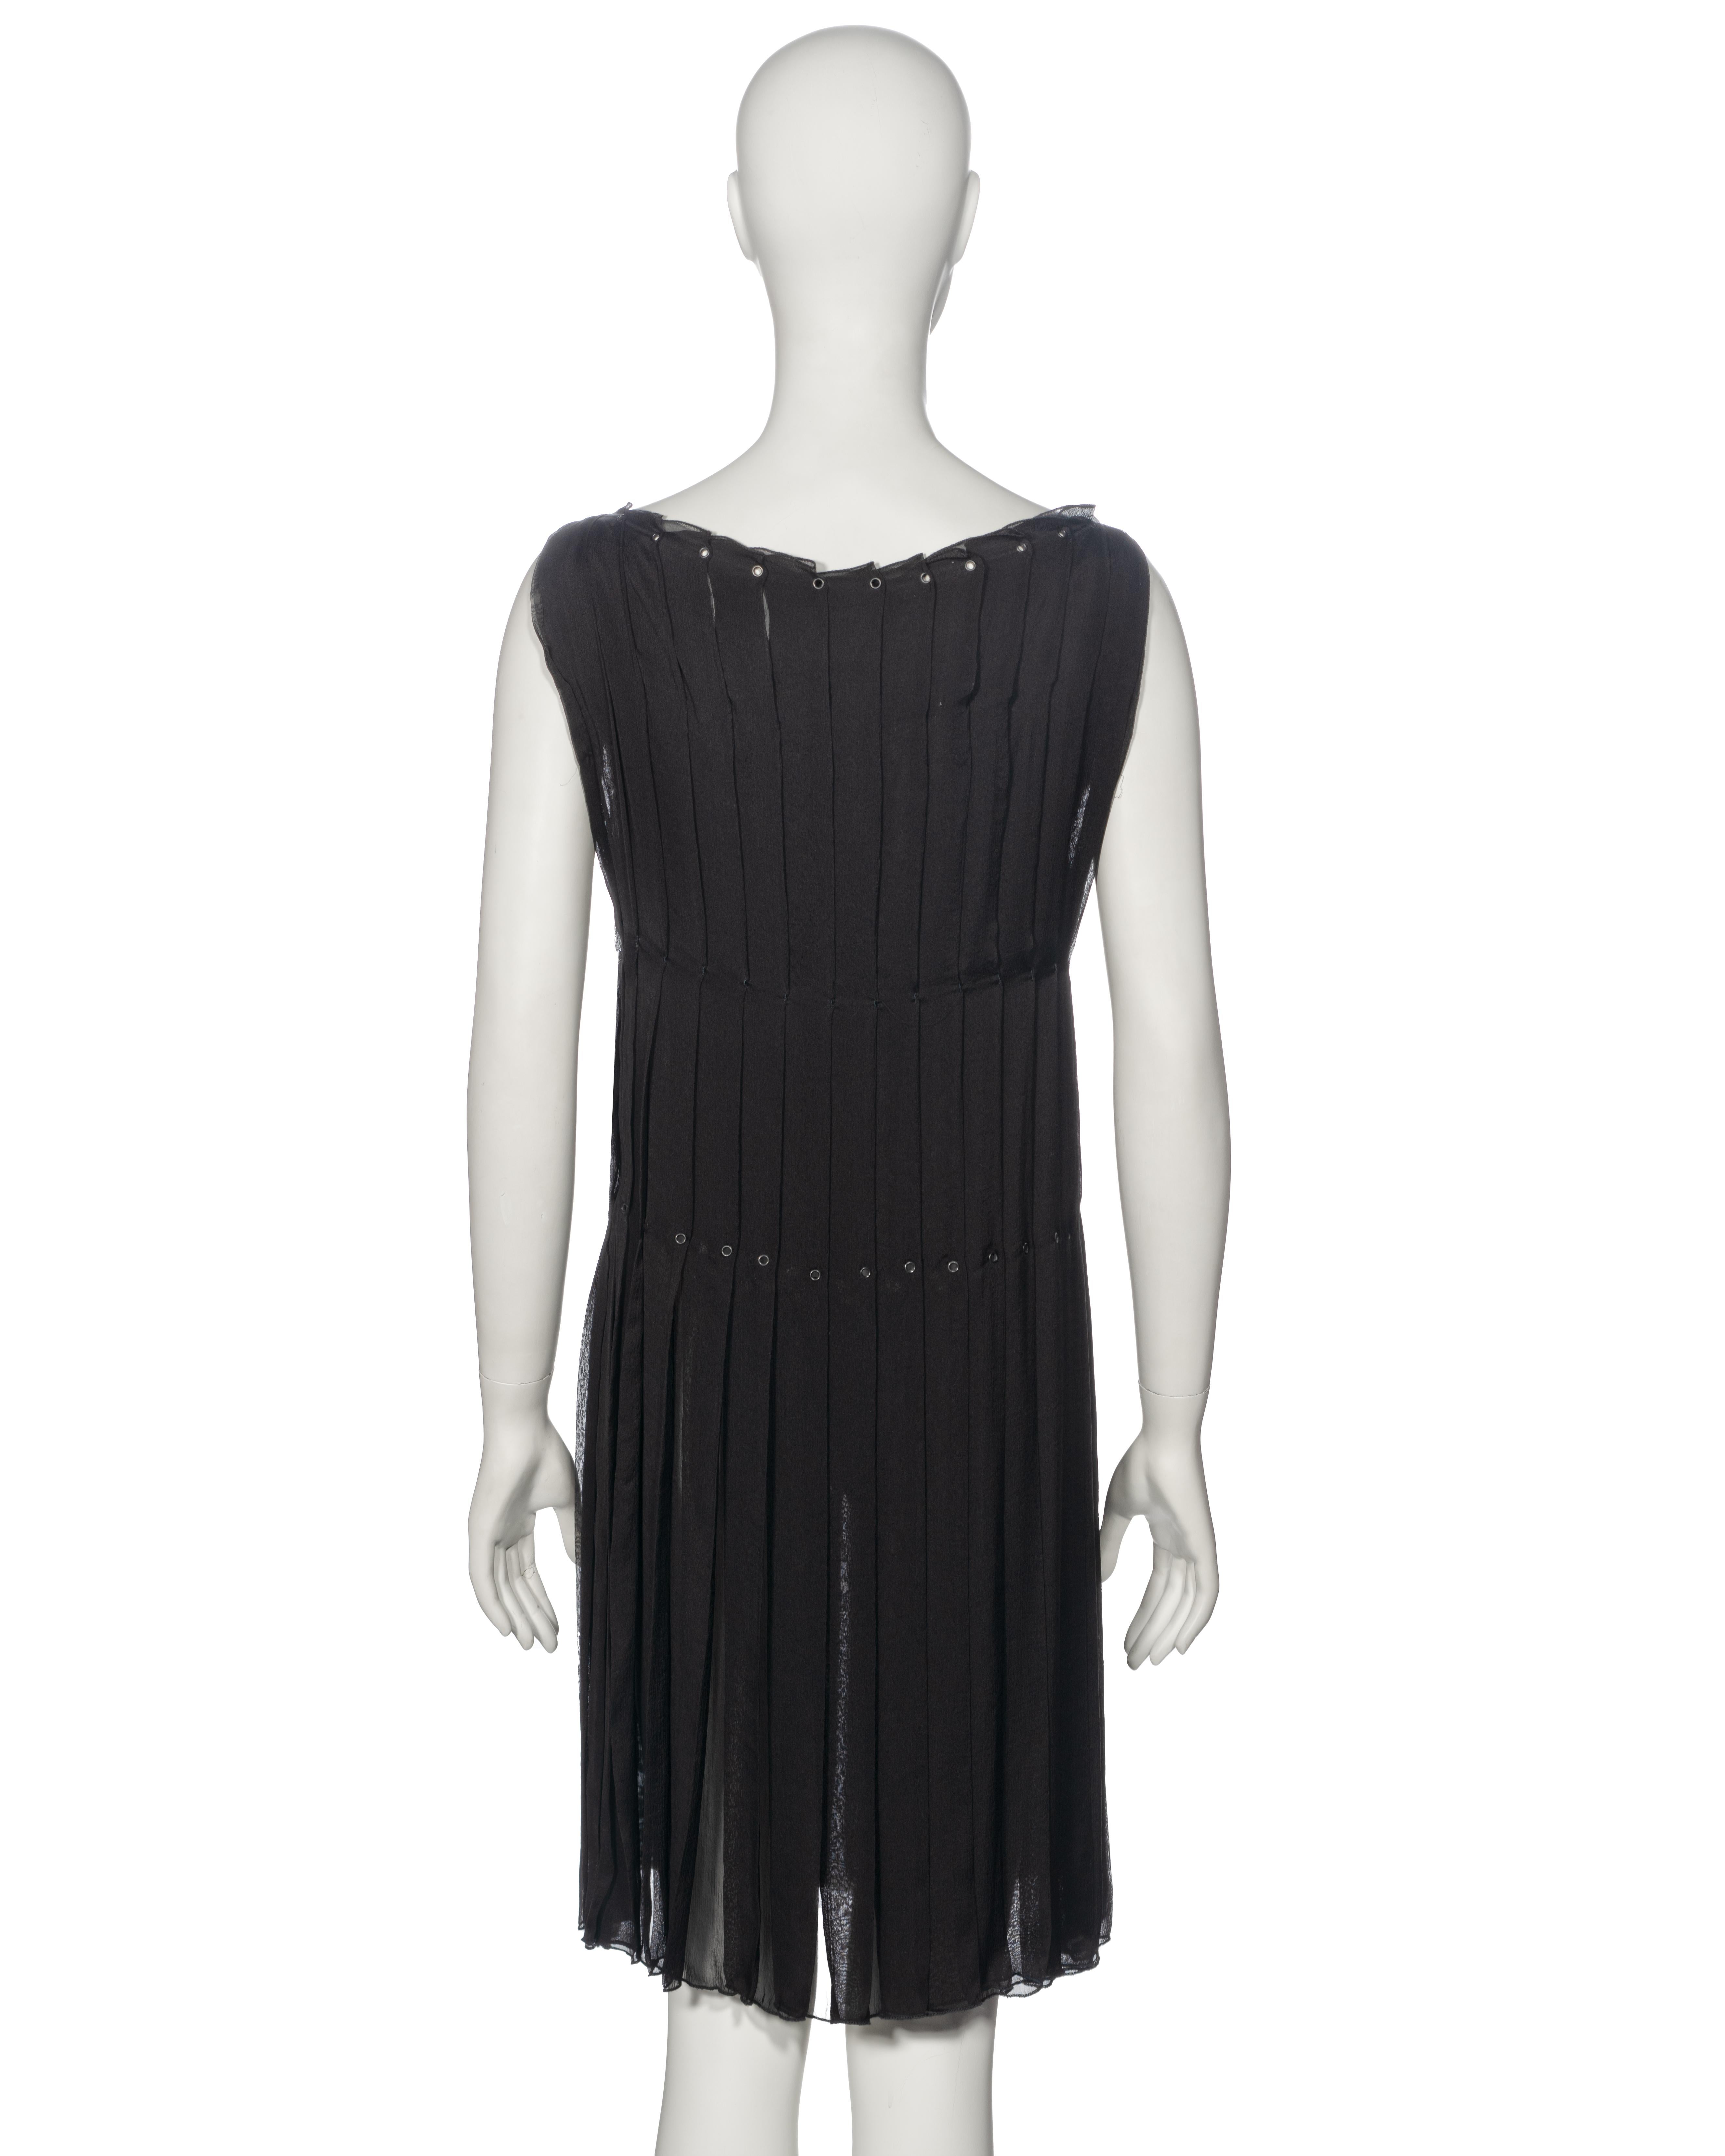 Prada by Miuccia Prada Black Silk Chiffon Box Pleated Shift Dress, ss 2000 For Sale 7